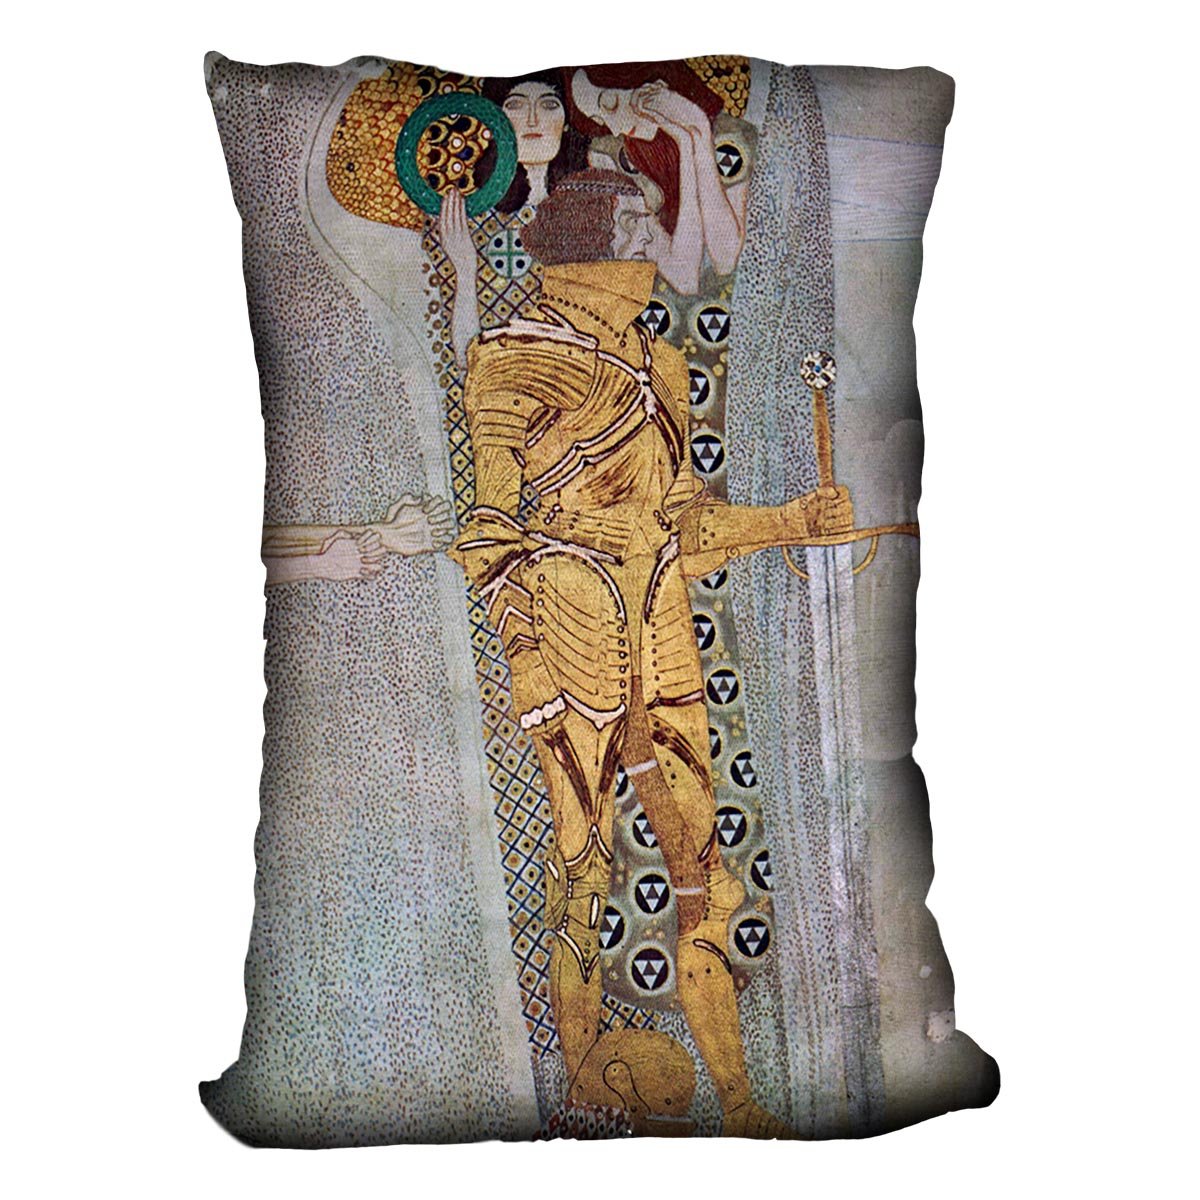 The Beethoven Freize by Klimt Throw Pillow